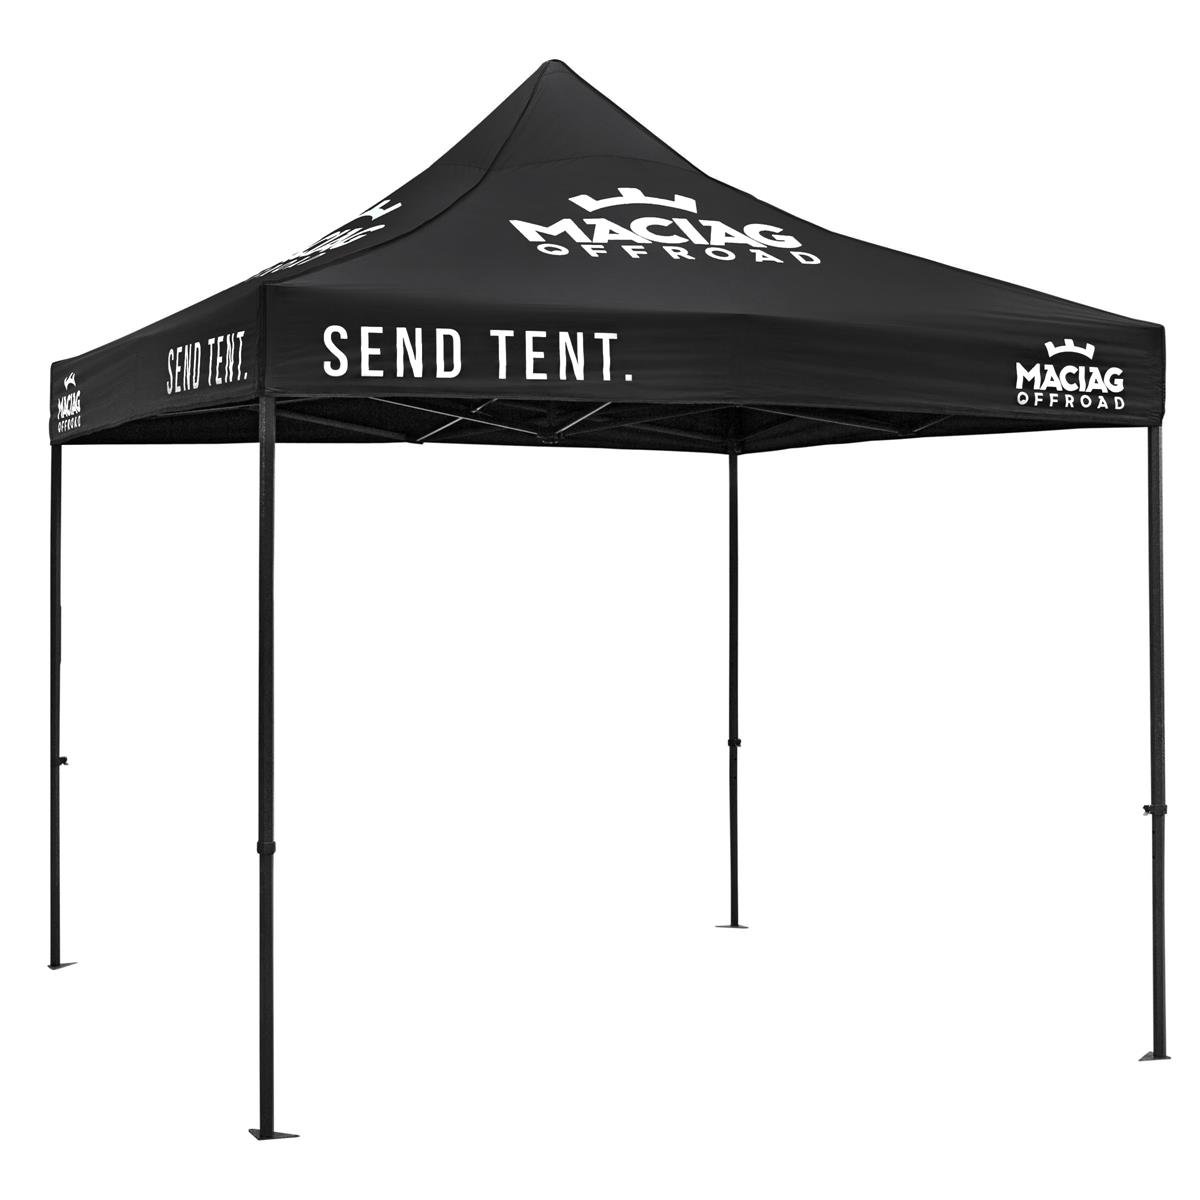 Maciag Offroad Race Tent 3x3 m SEND TENT. Standard, without sidewalls - Black/White